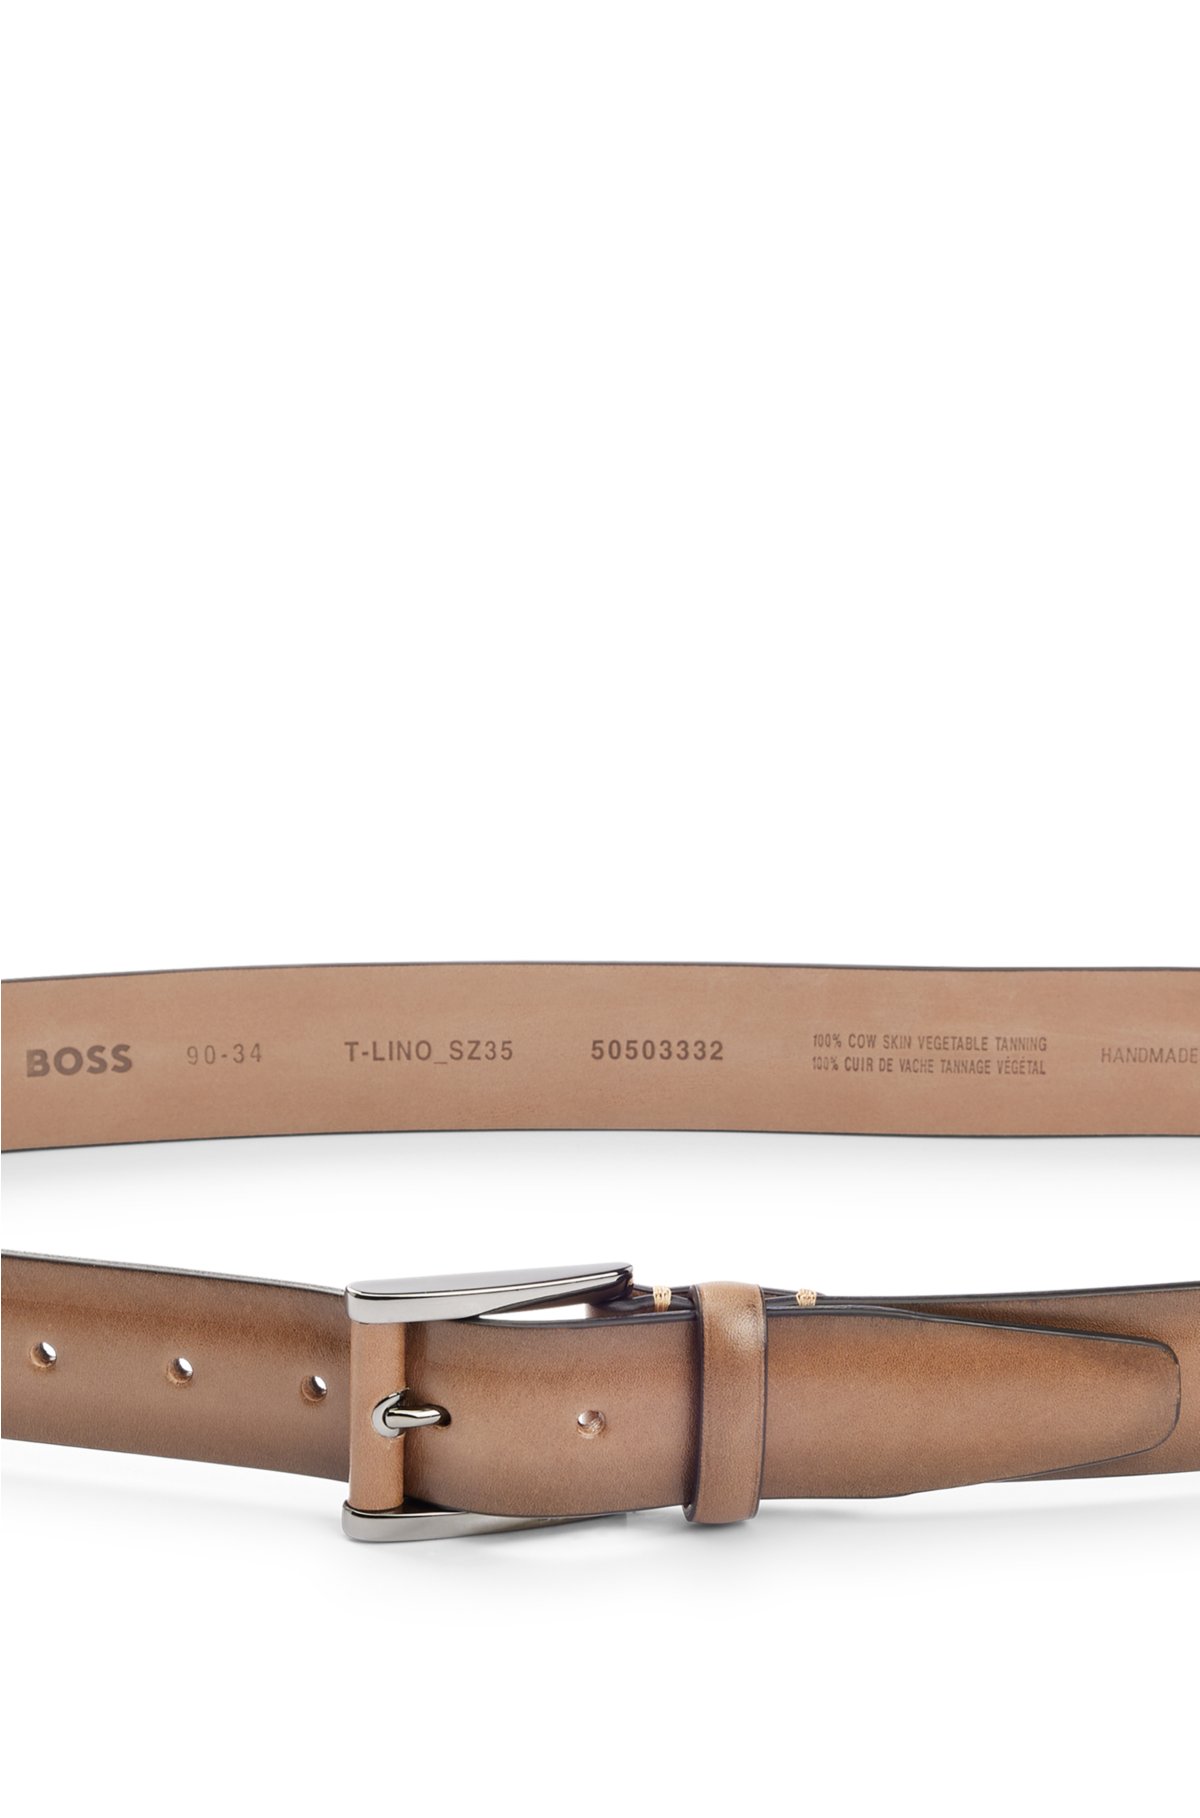 Men's Cognac Embossed Thin Leather Belt - Unique Design 34 / 85 cm - Brown